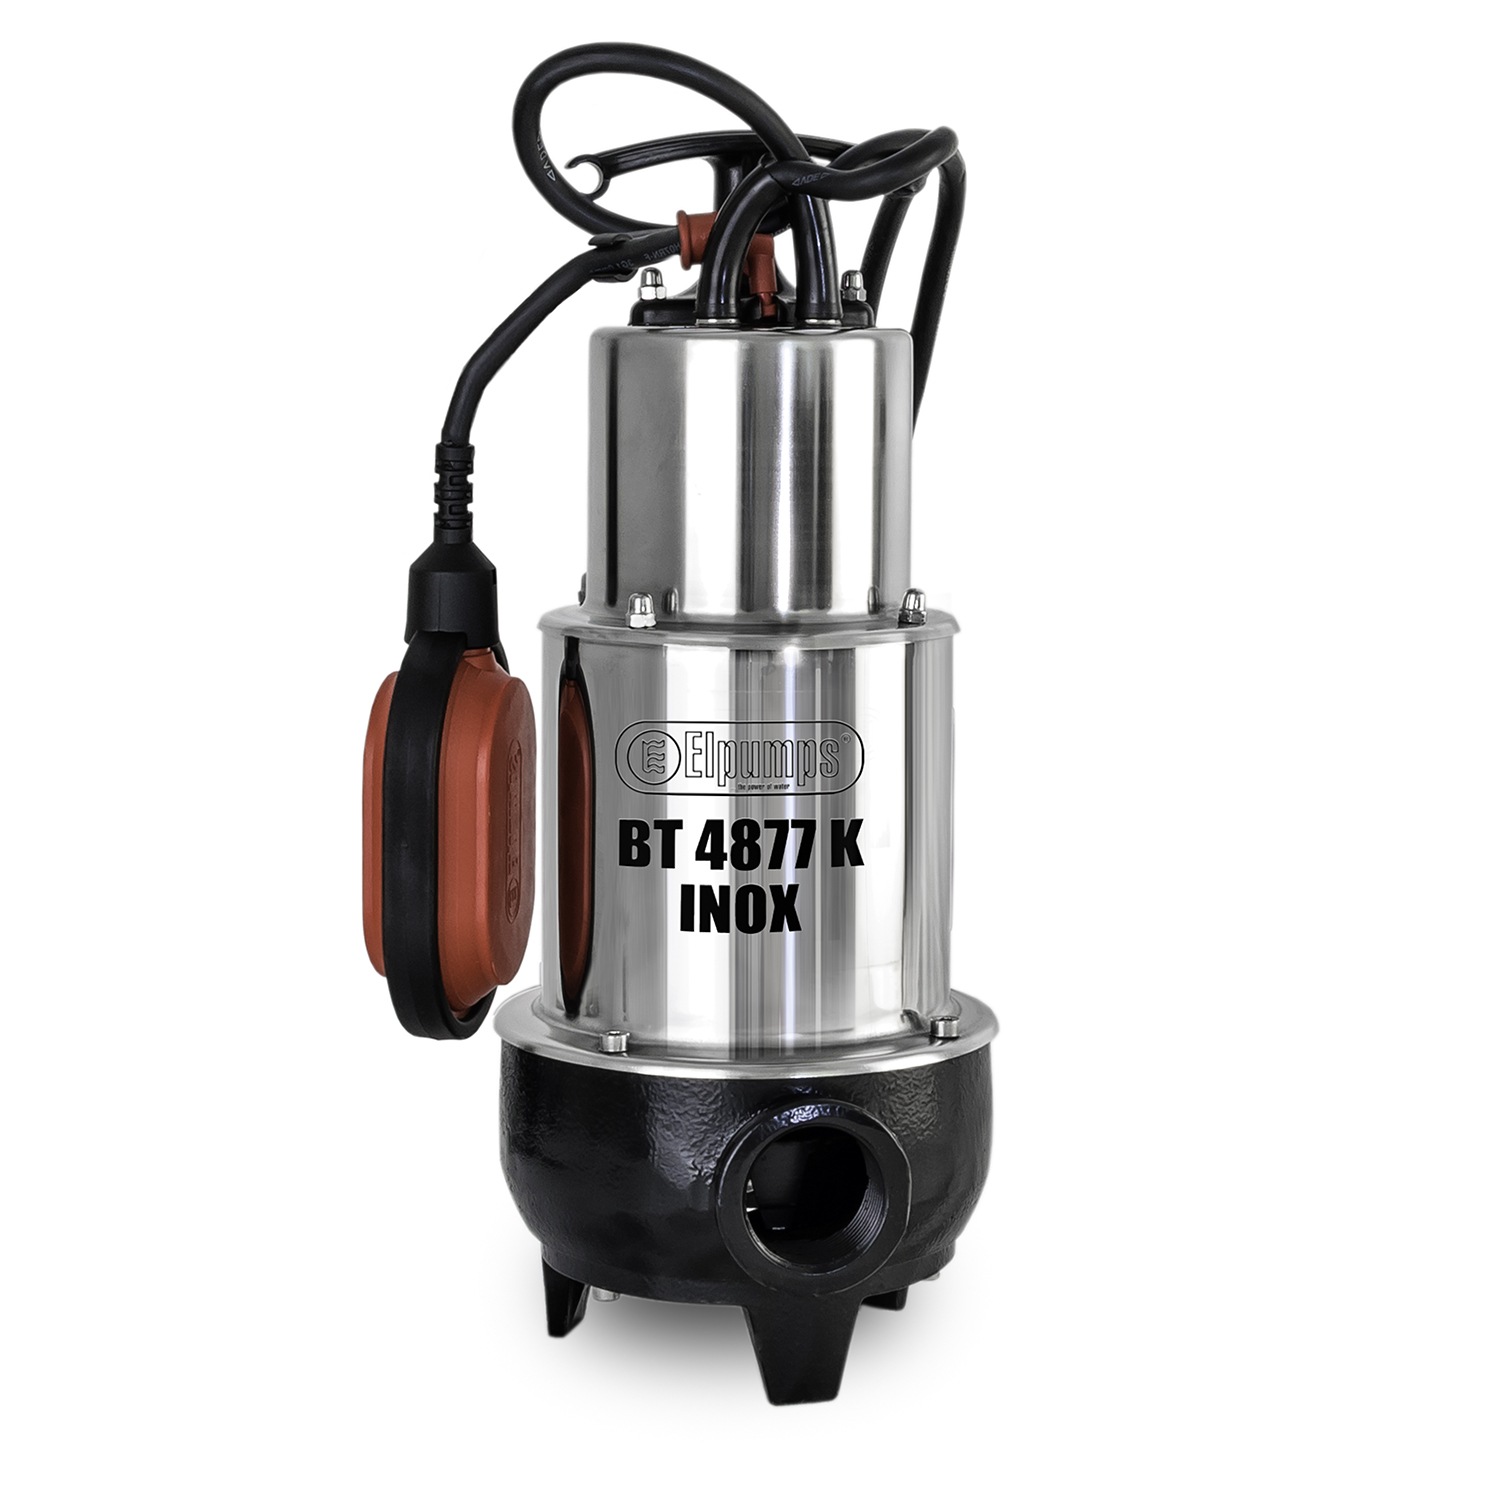 BT 4877 K INOX Submersible cutter pump for sewage